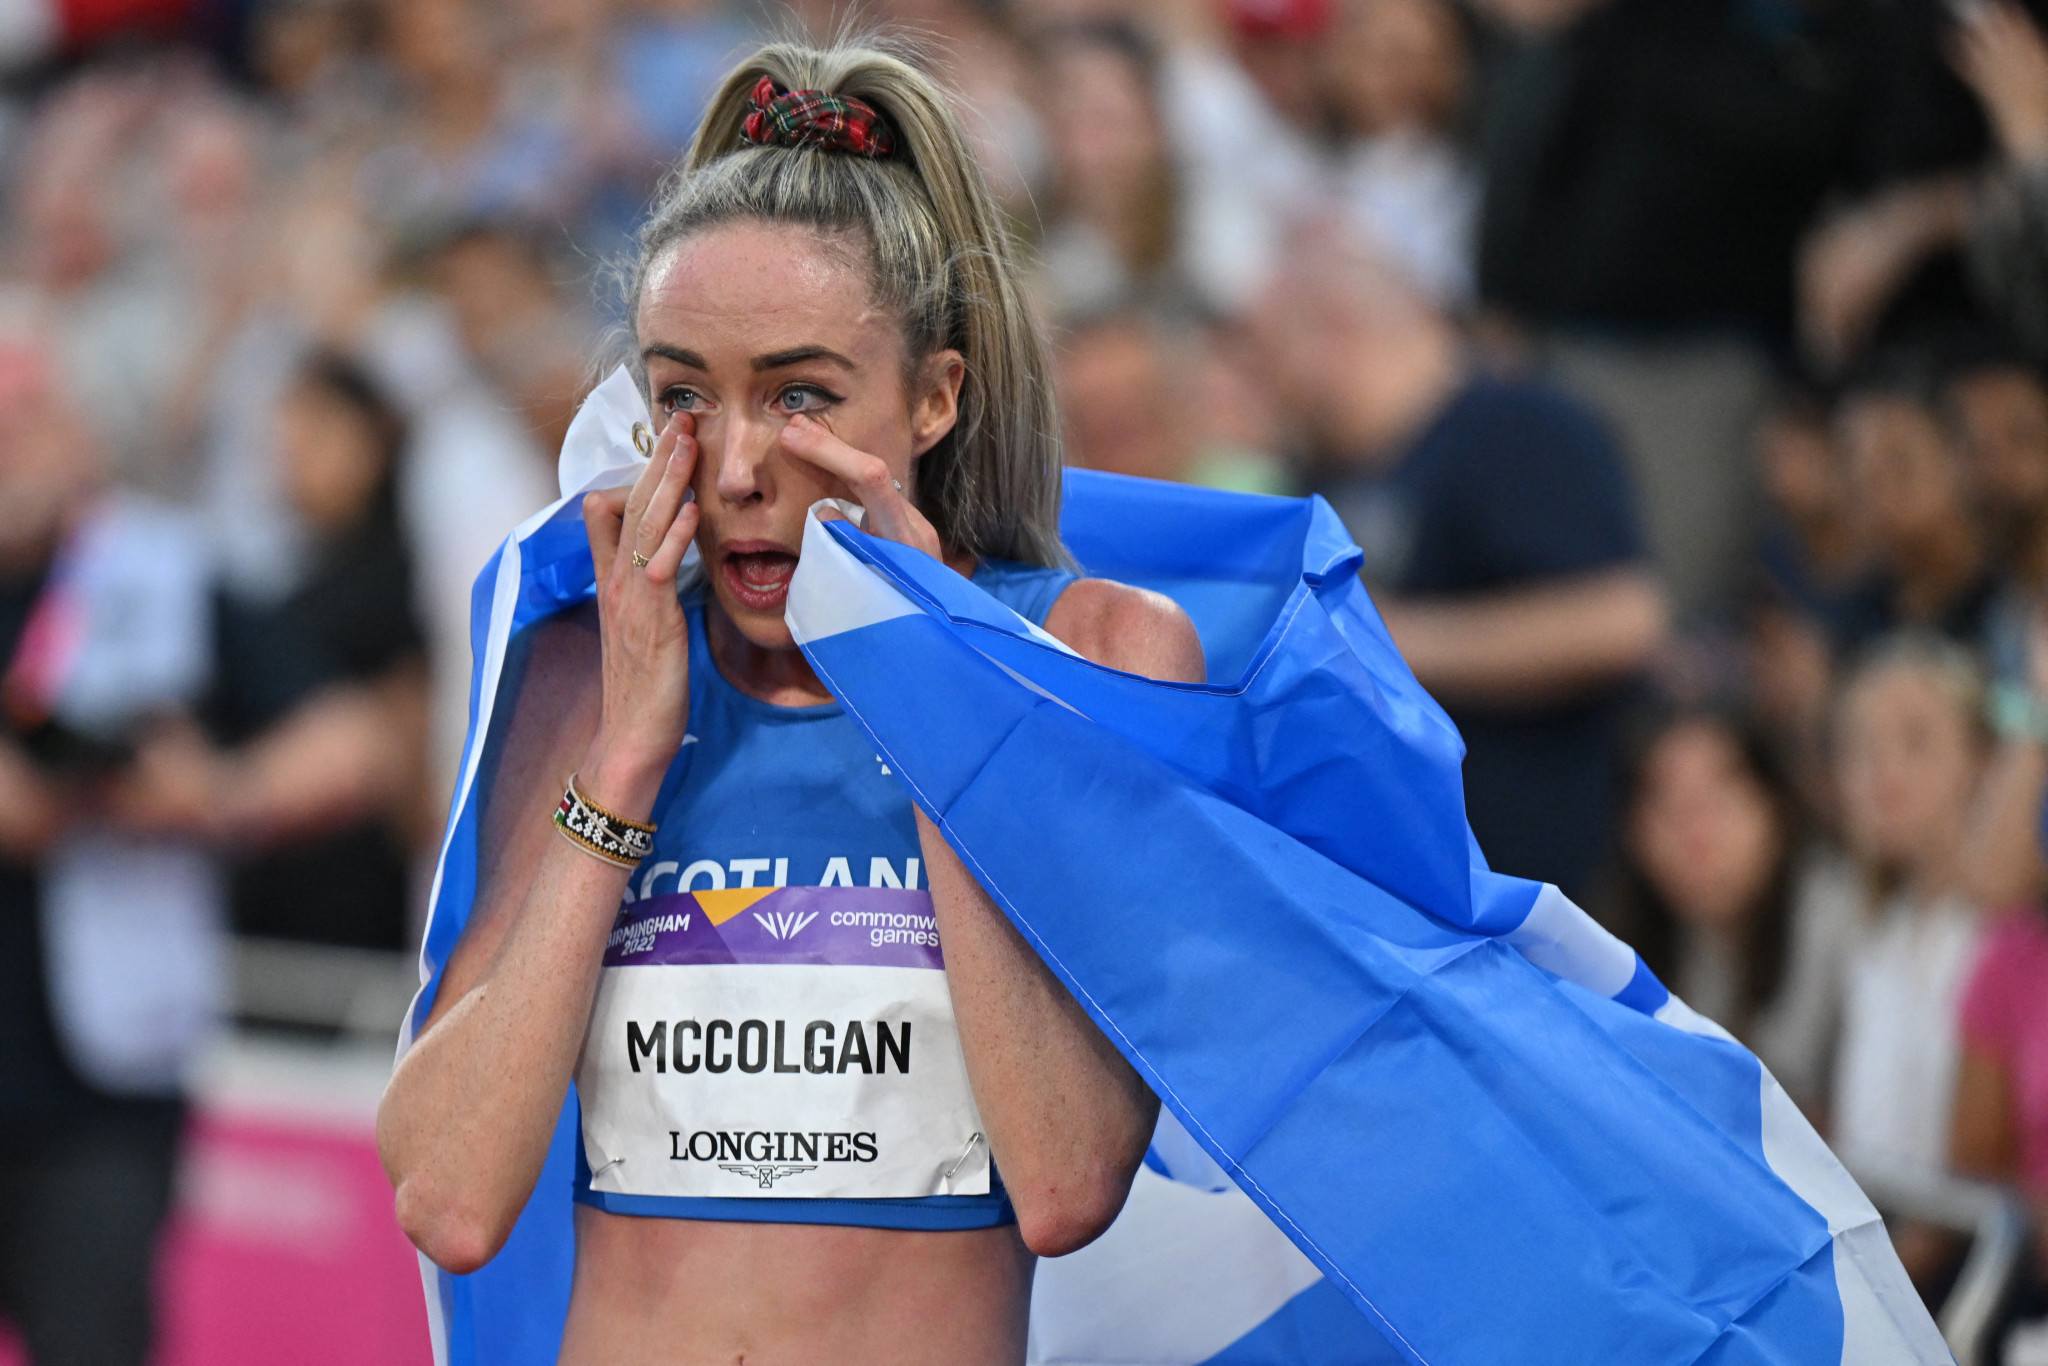 McColgan matches mother's achievement in 10,000m at Birmingham 2022